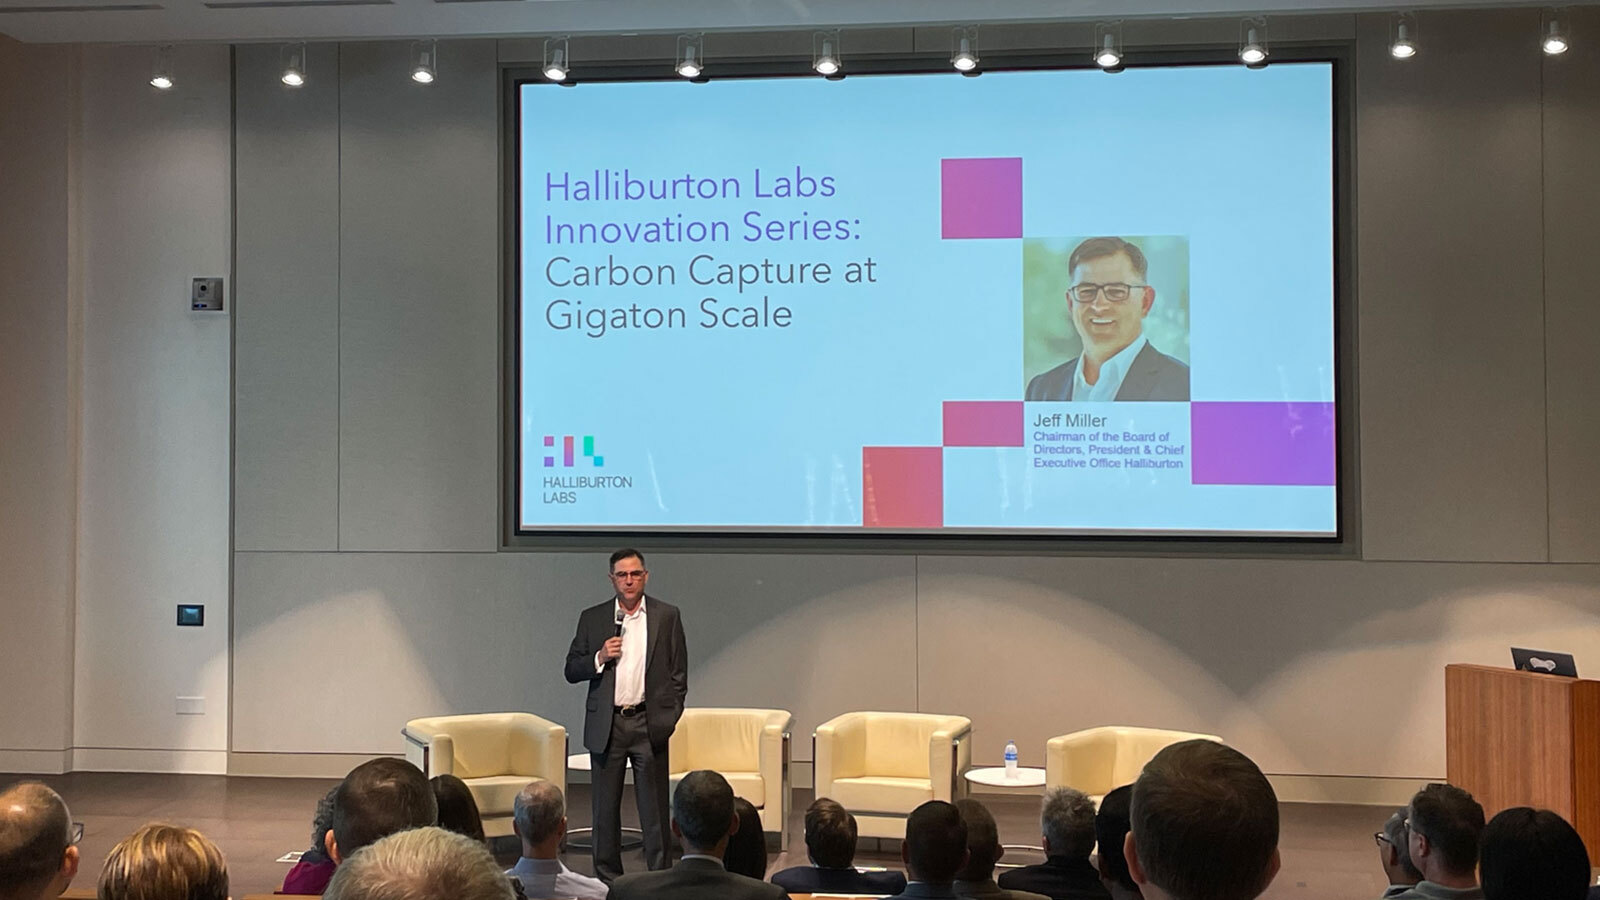 Halliburton Labs Innovation Series: Carbon Capture at Gigaton Scale